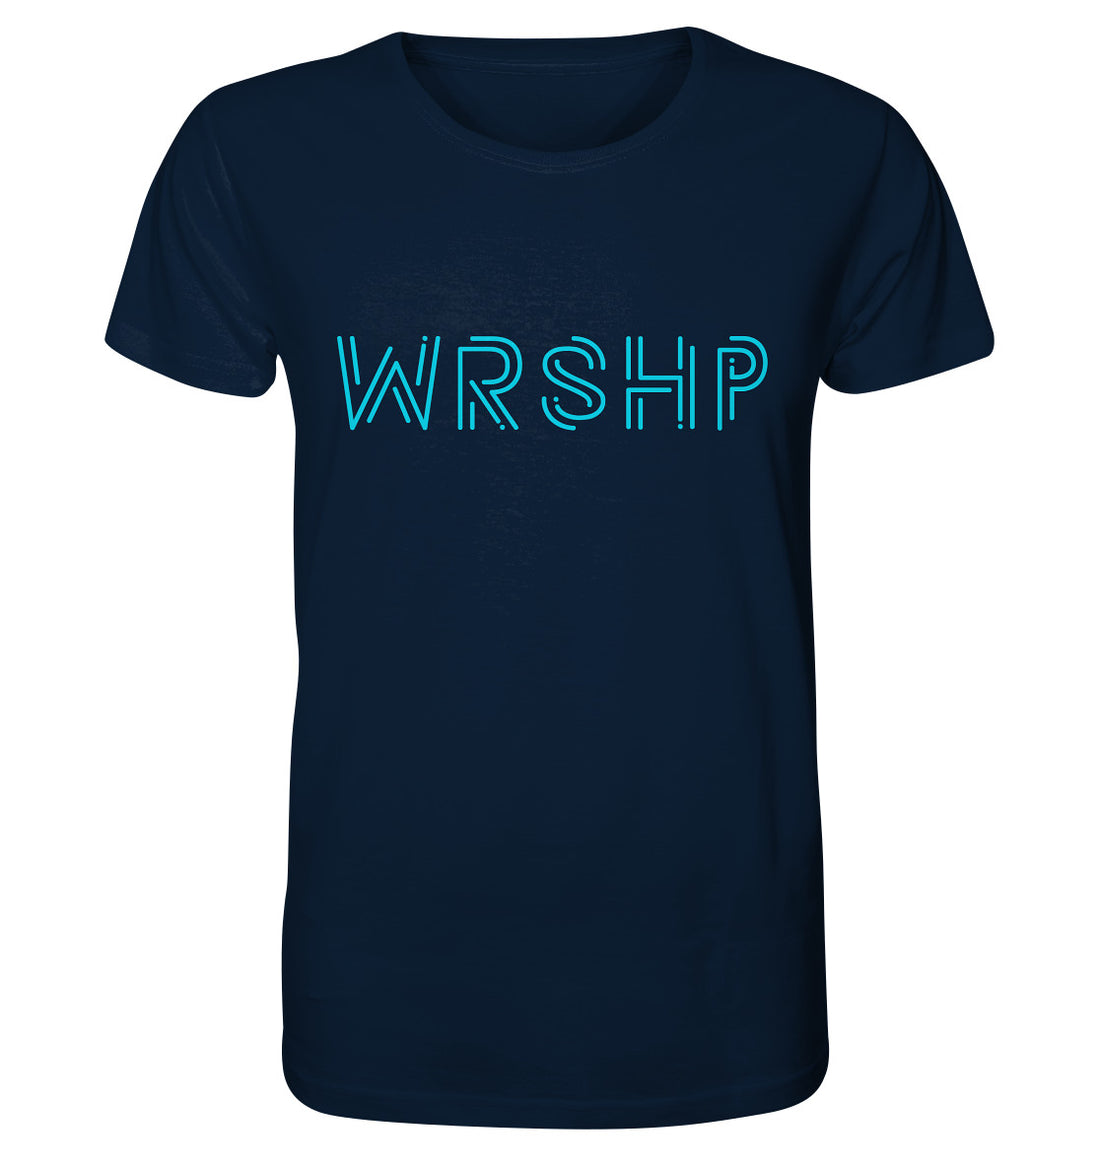 WRSHP - Organic Shirt